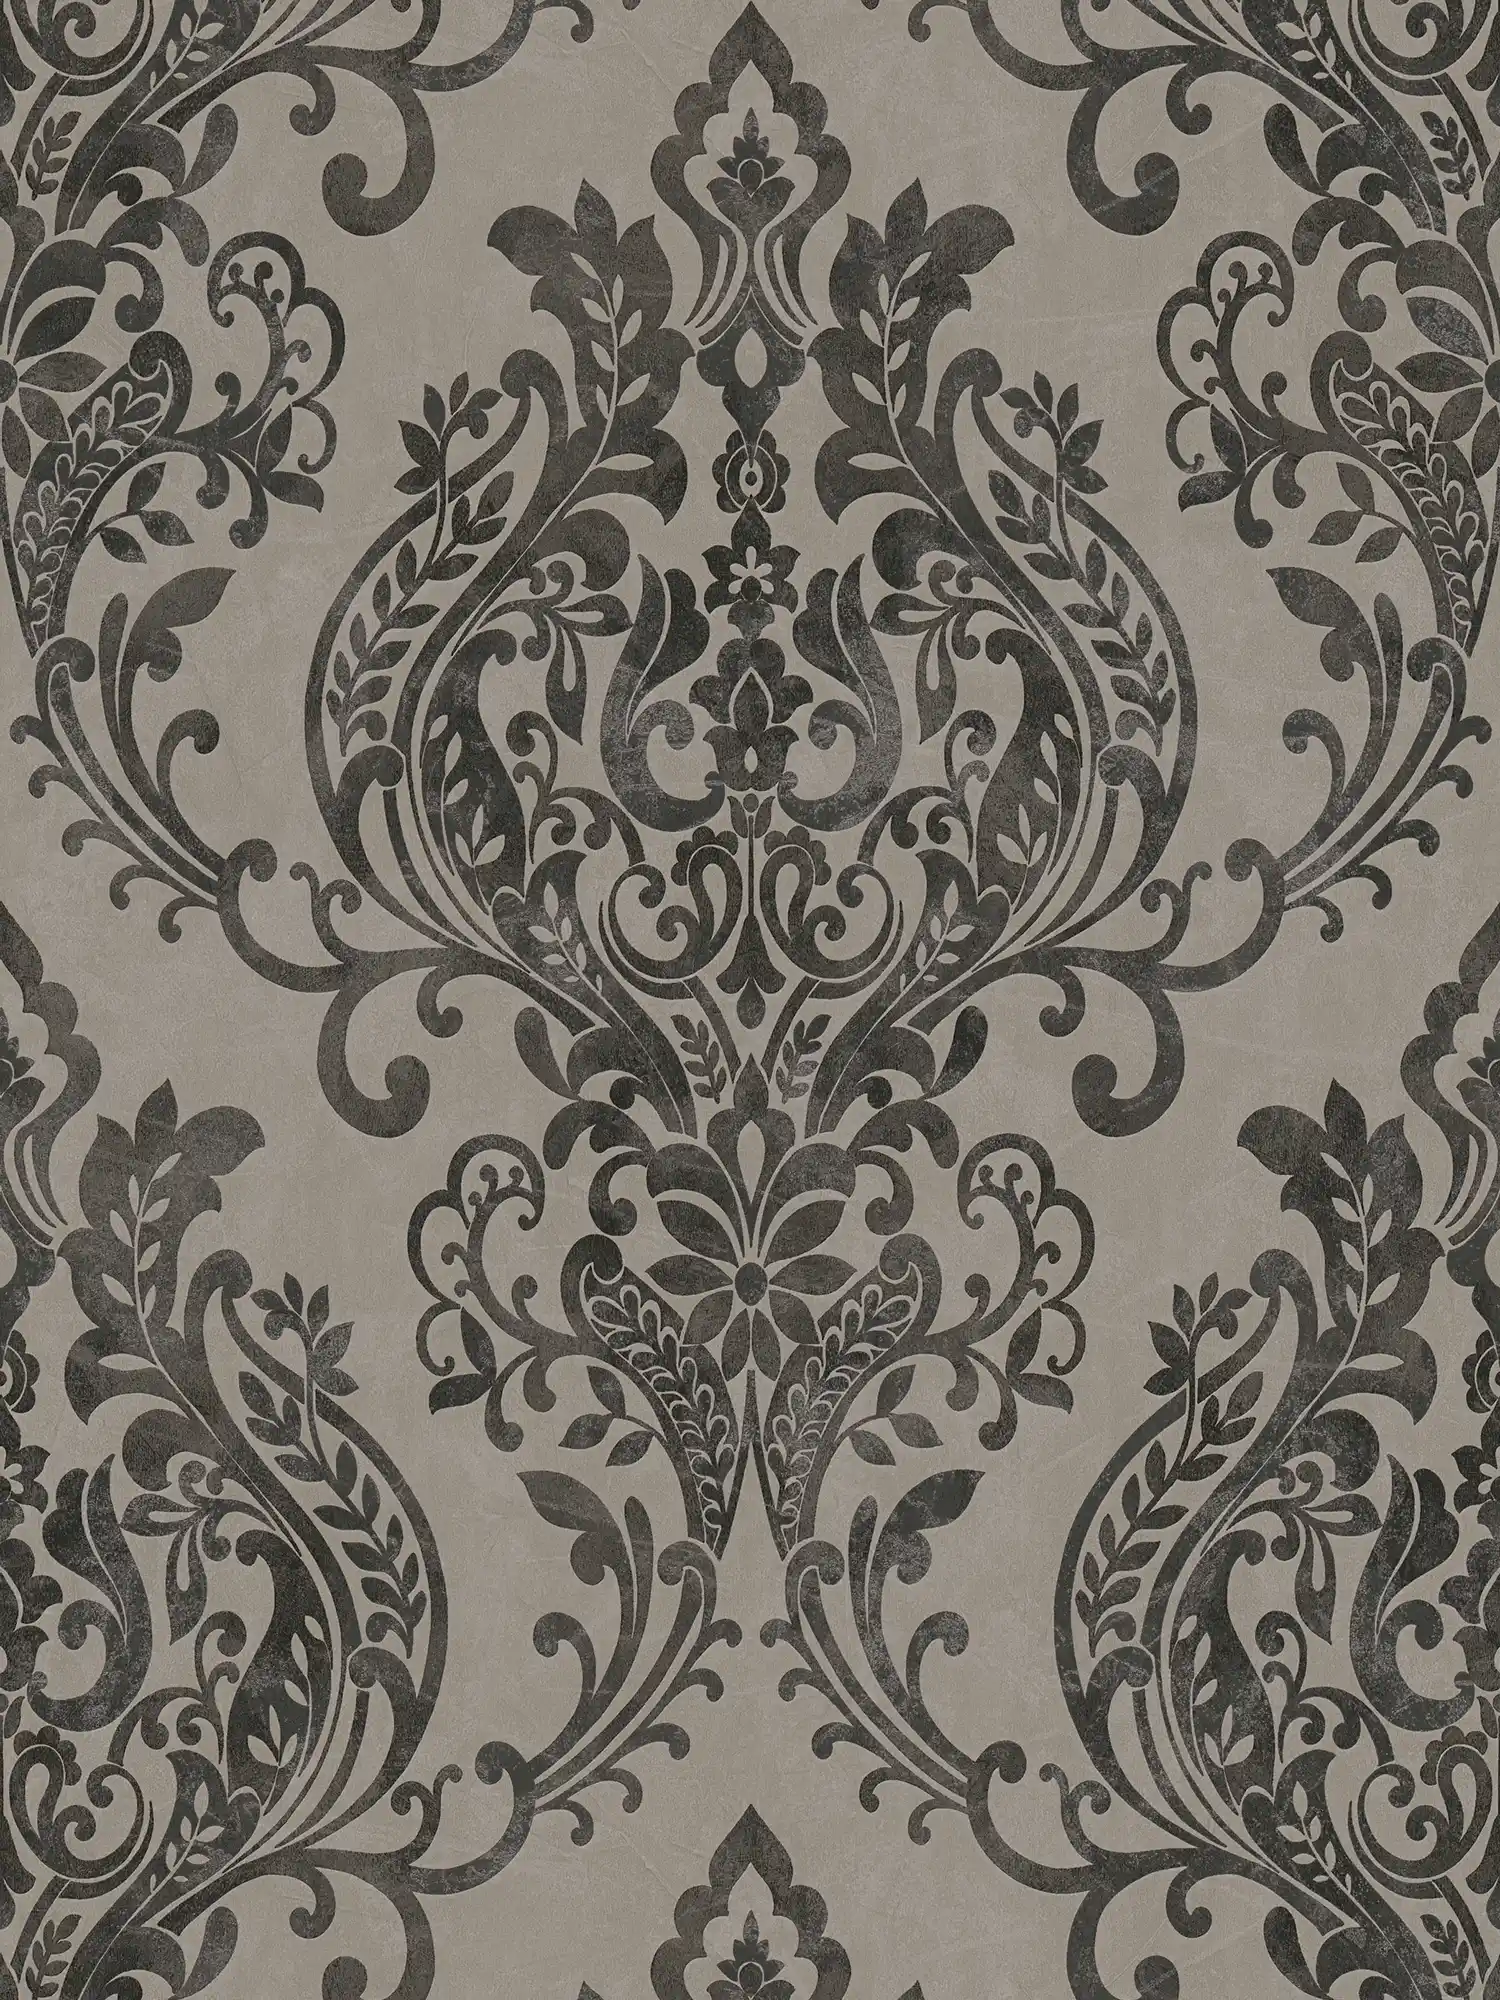 Ornament-Tapete Vintage, floral – Grau, Schwarz
